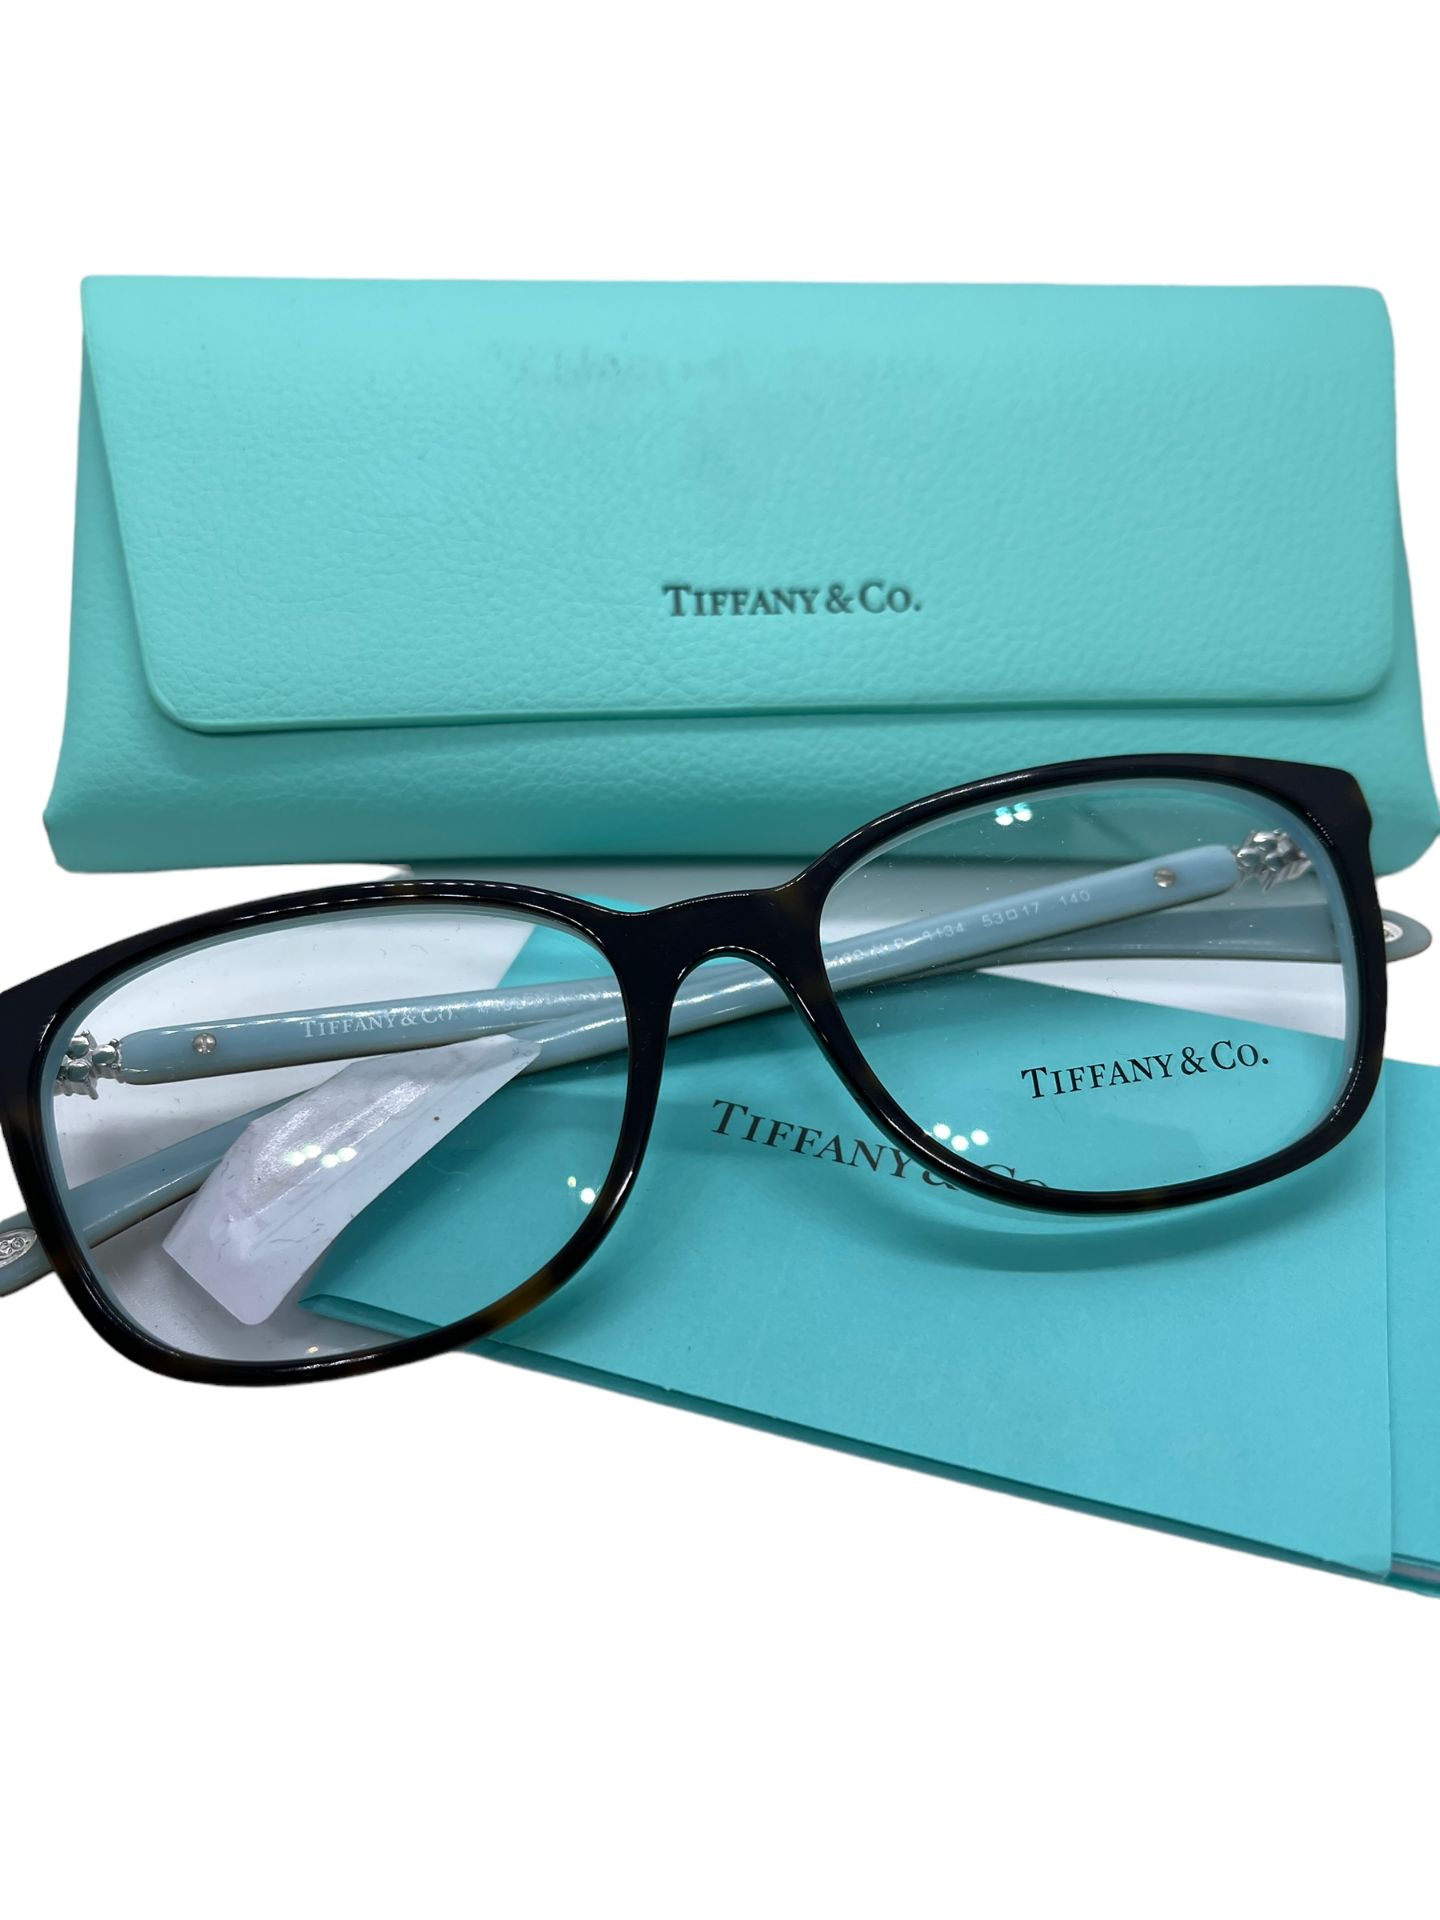 Tiffany spectacles demo ladies